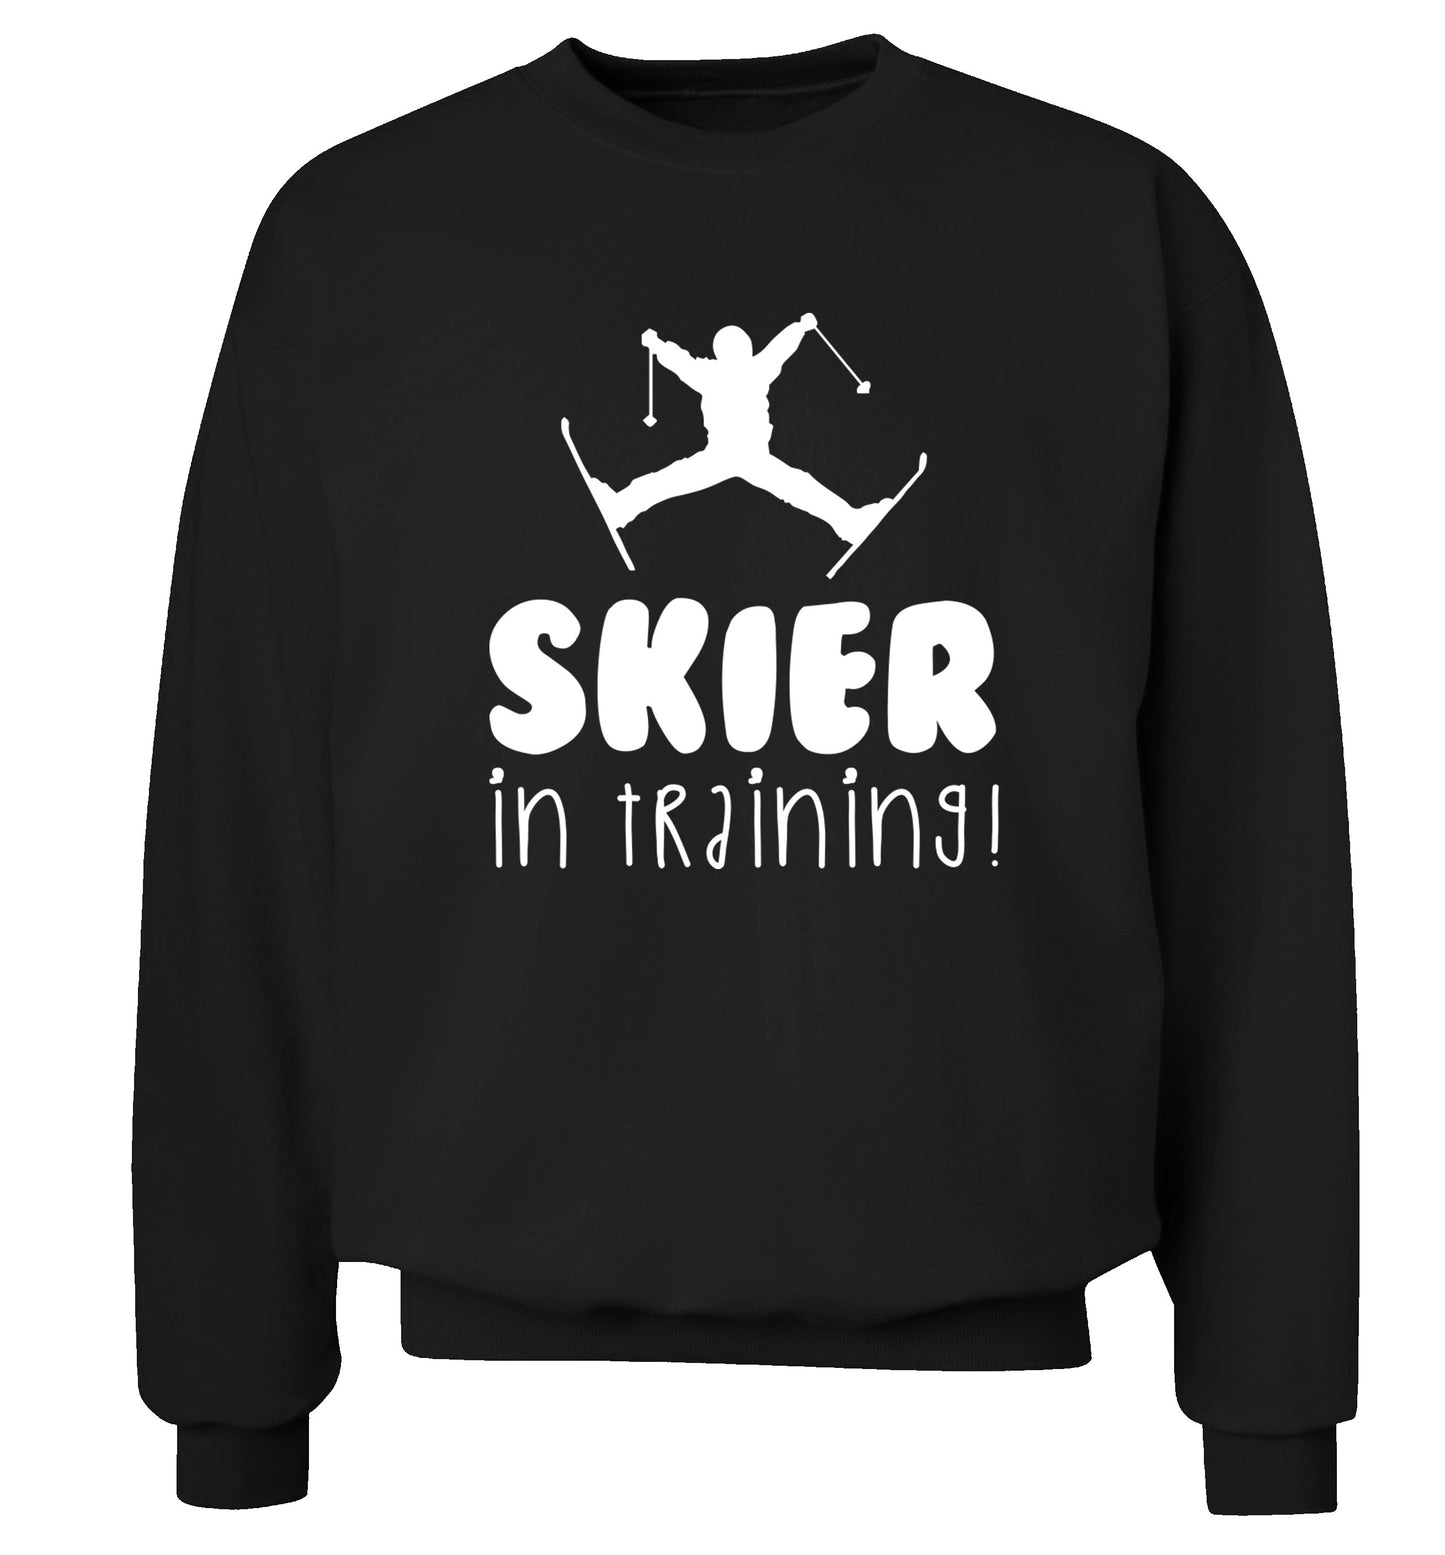 Skier in training Adult's unisex black Sweater 2XL